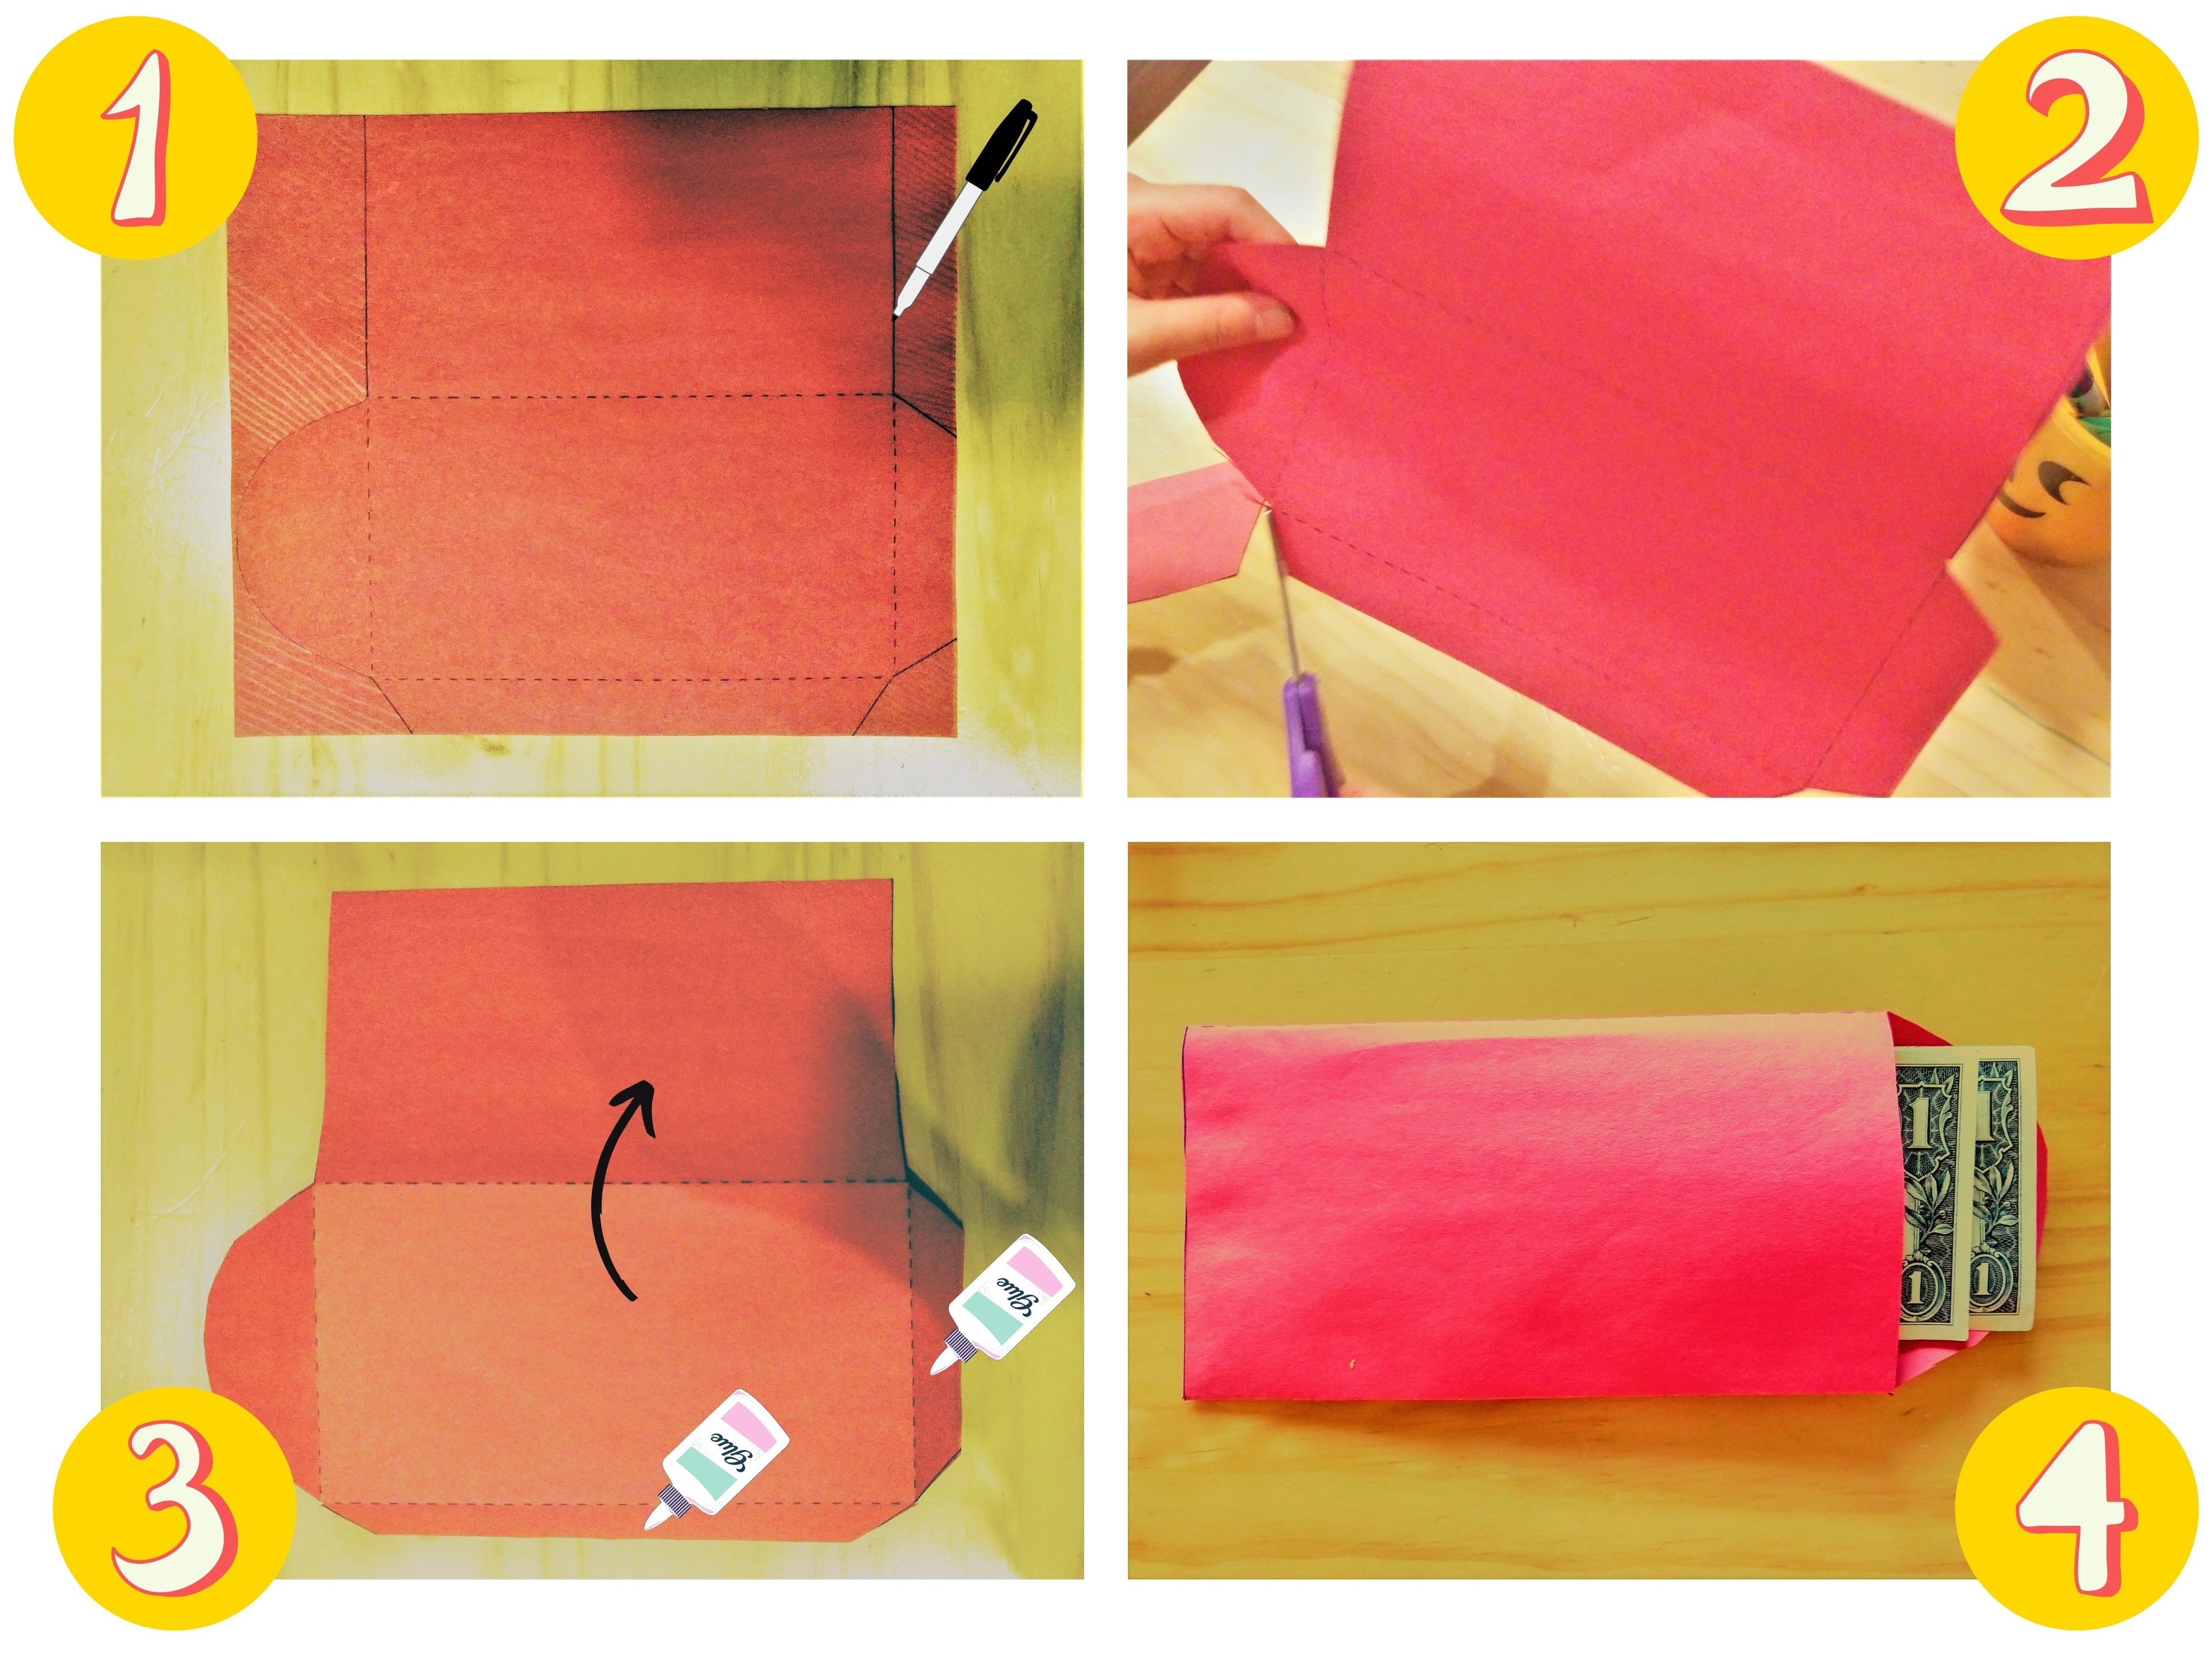 Making a red envelope